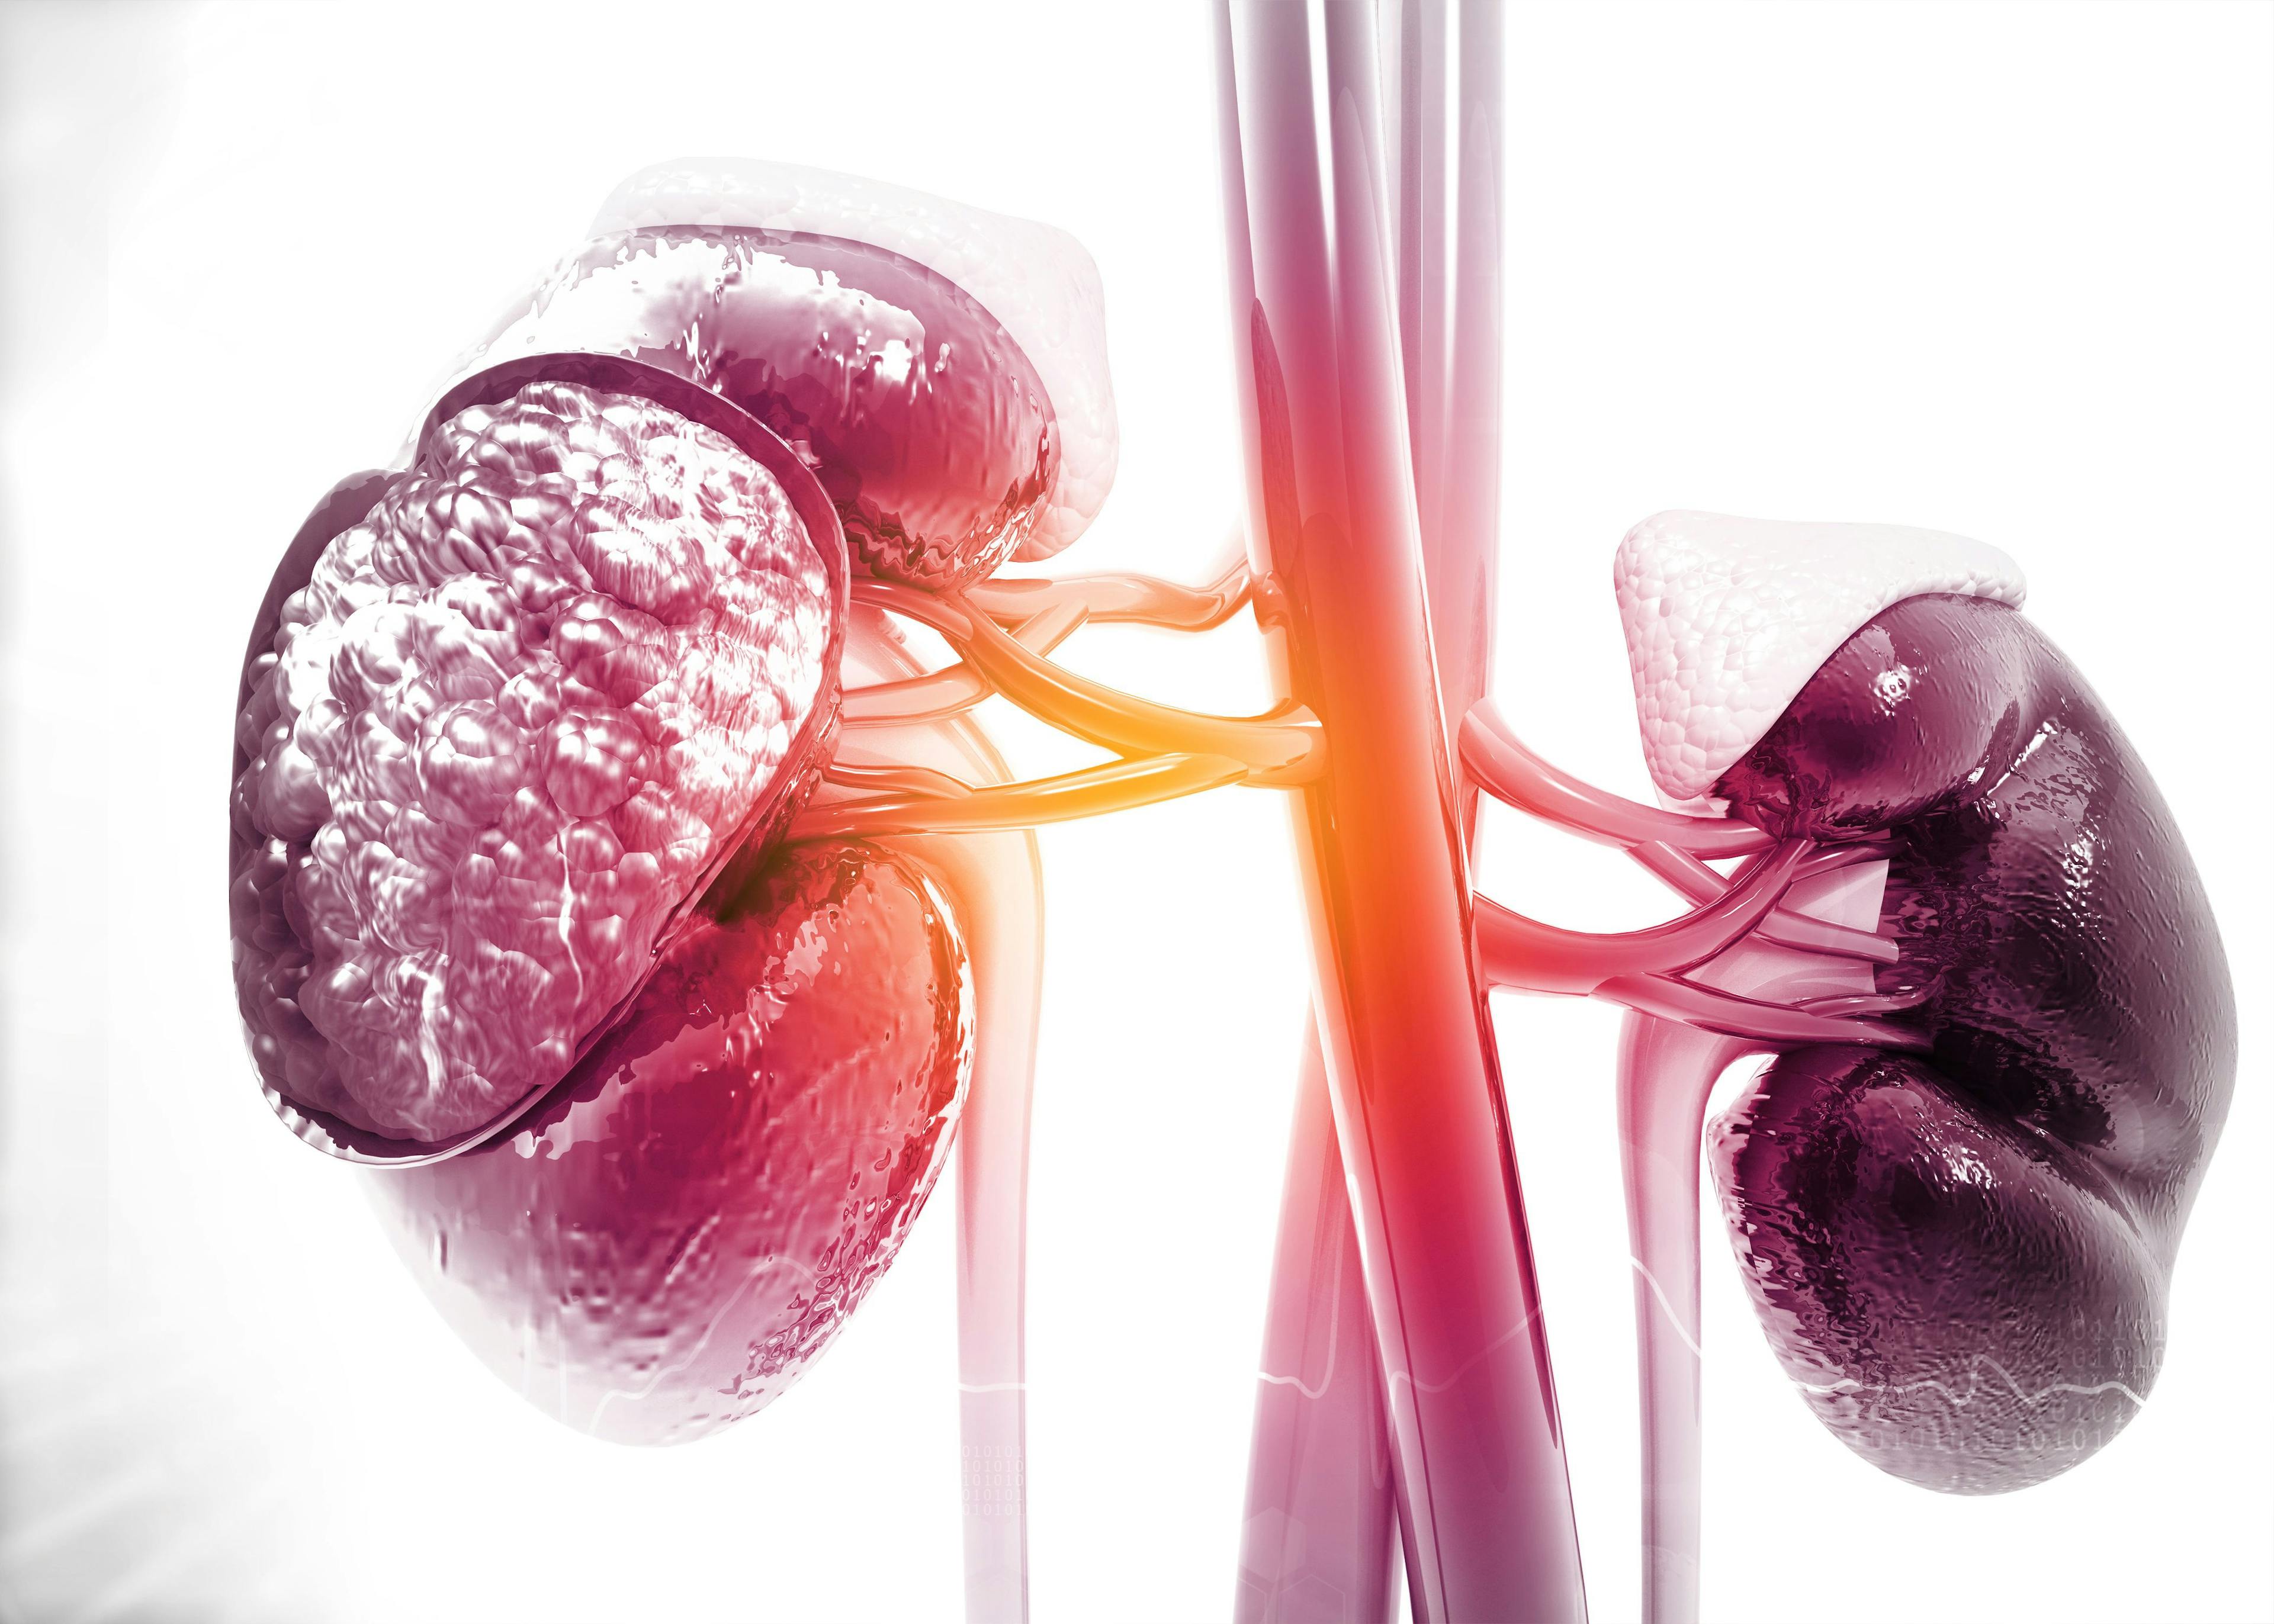 Diseased human kidney on science background | Image Credit: Rasi - stock.adobe.com